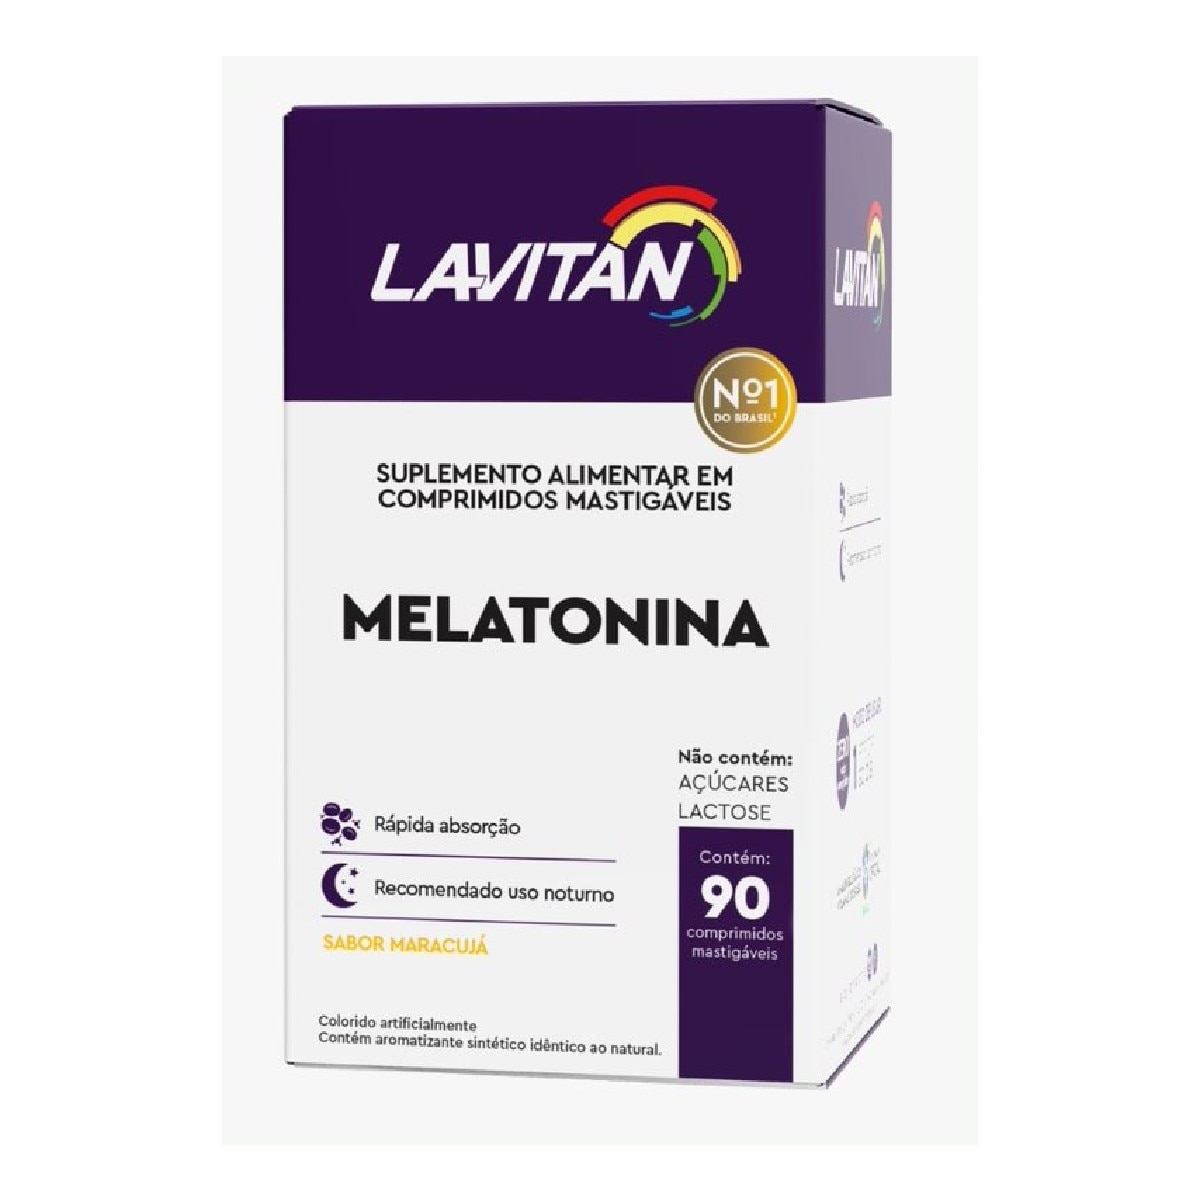 Melatonina Lavitan Sabor Maracuja 90 Comprimidos Mastigaveis